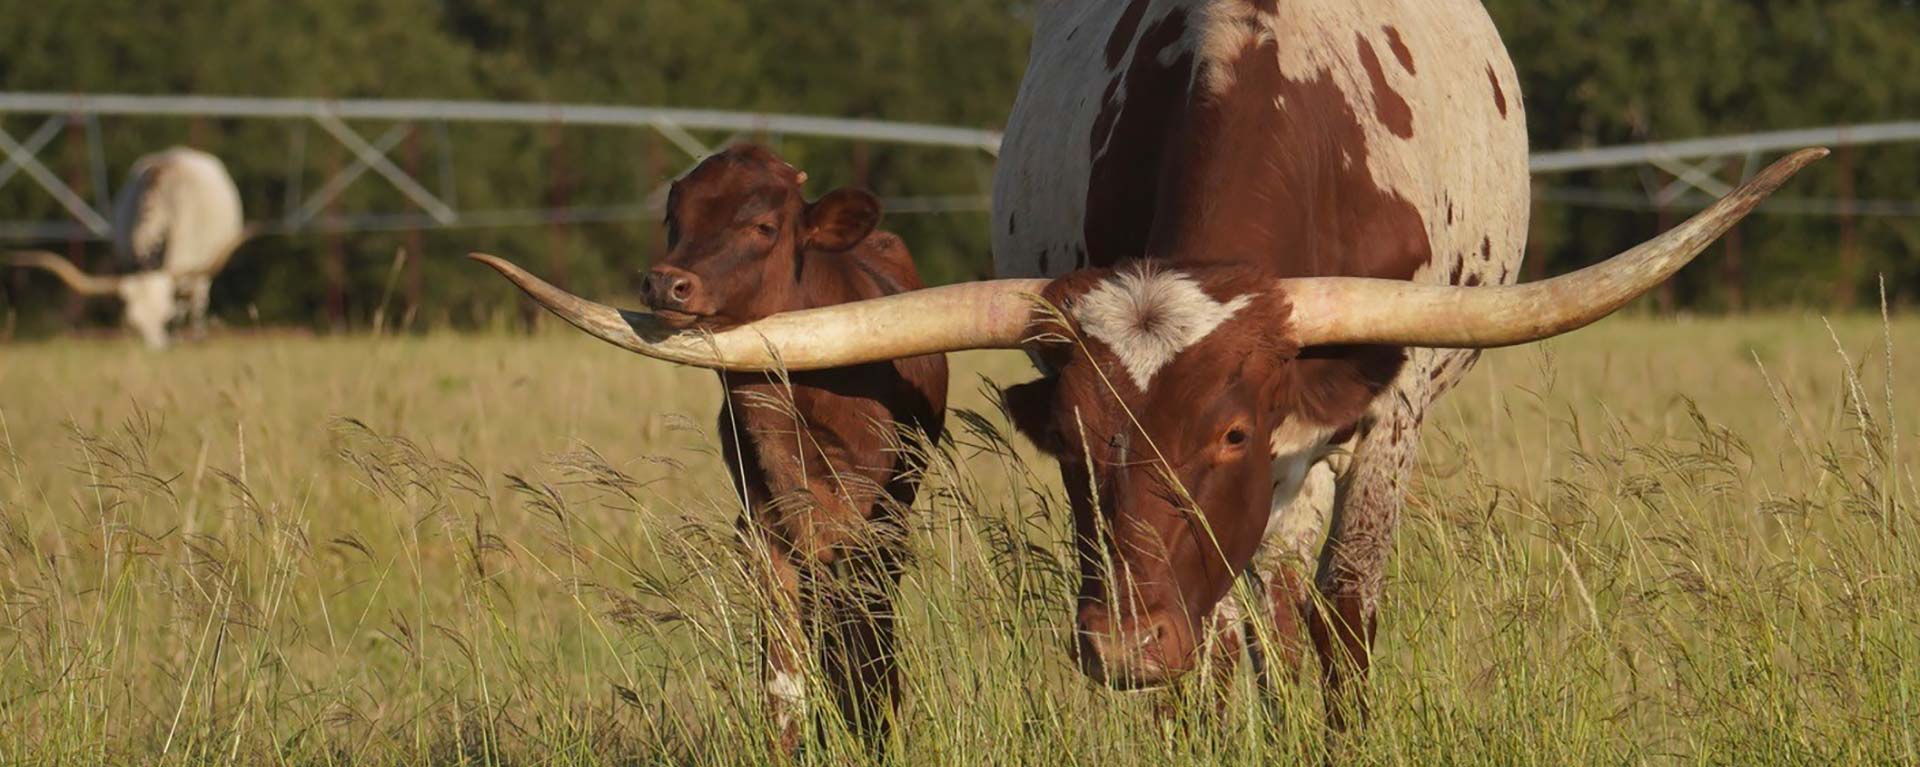 Texas Longhorn cows for sale